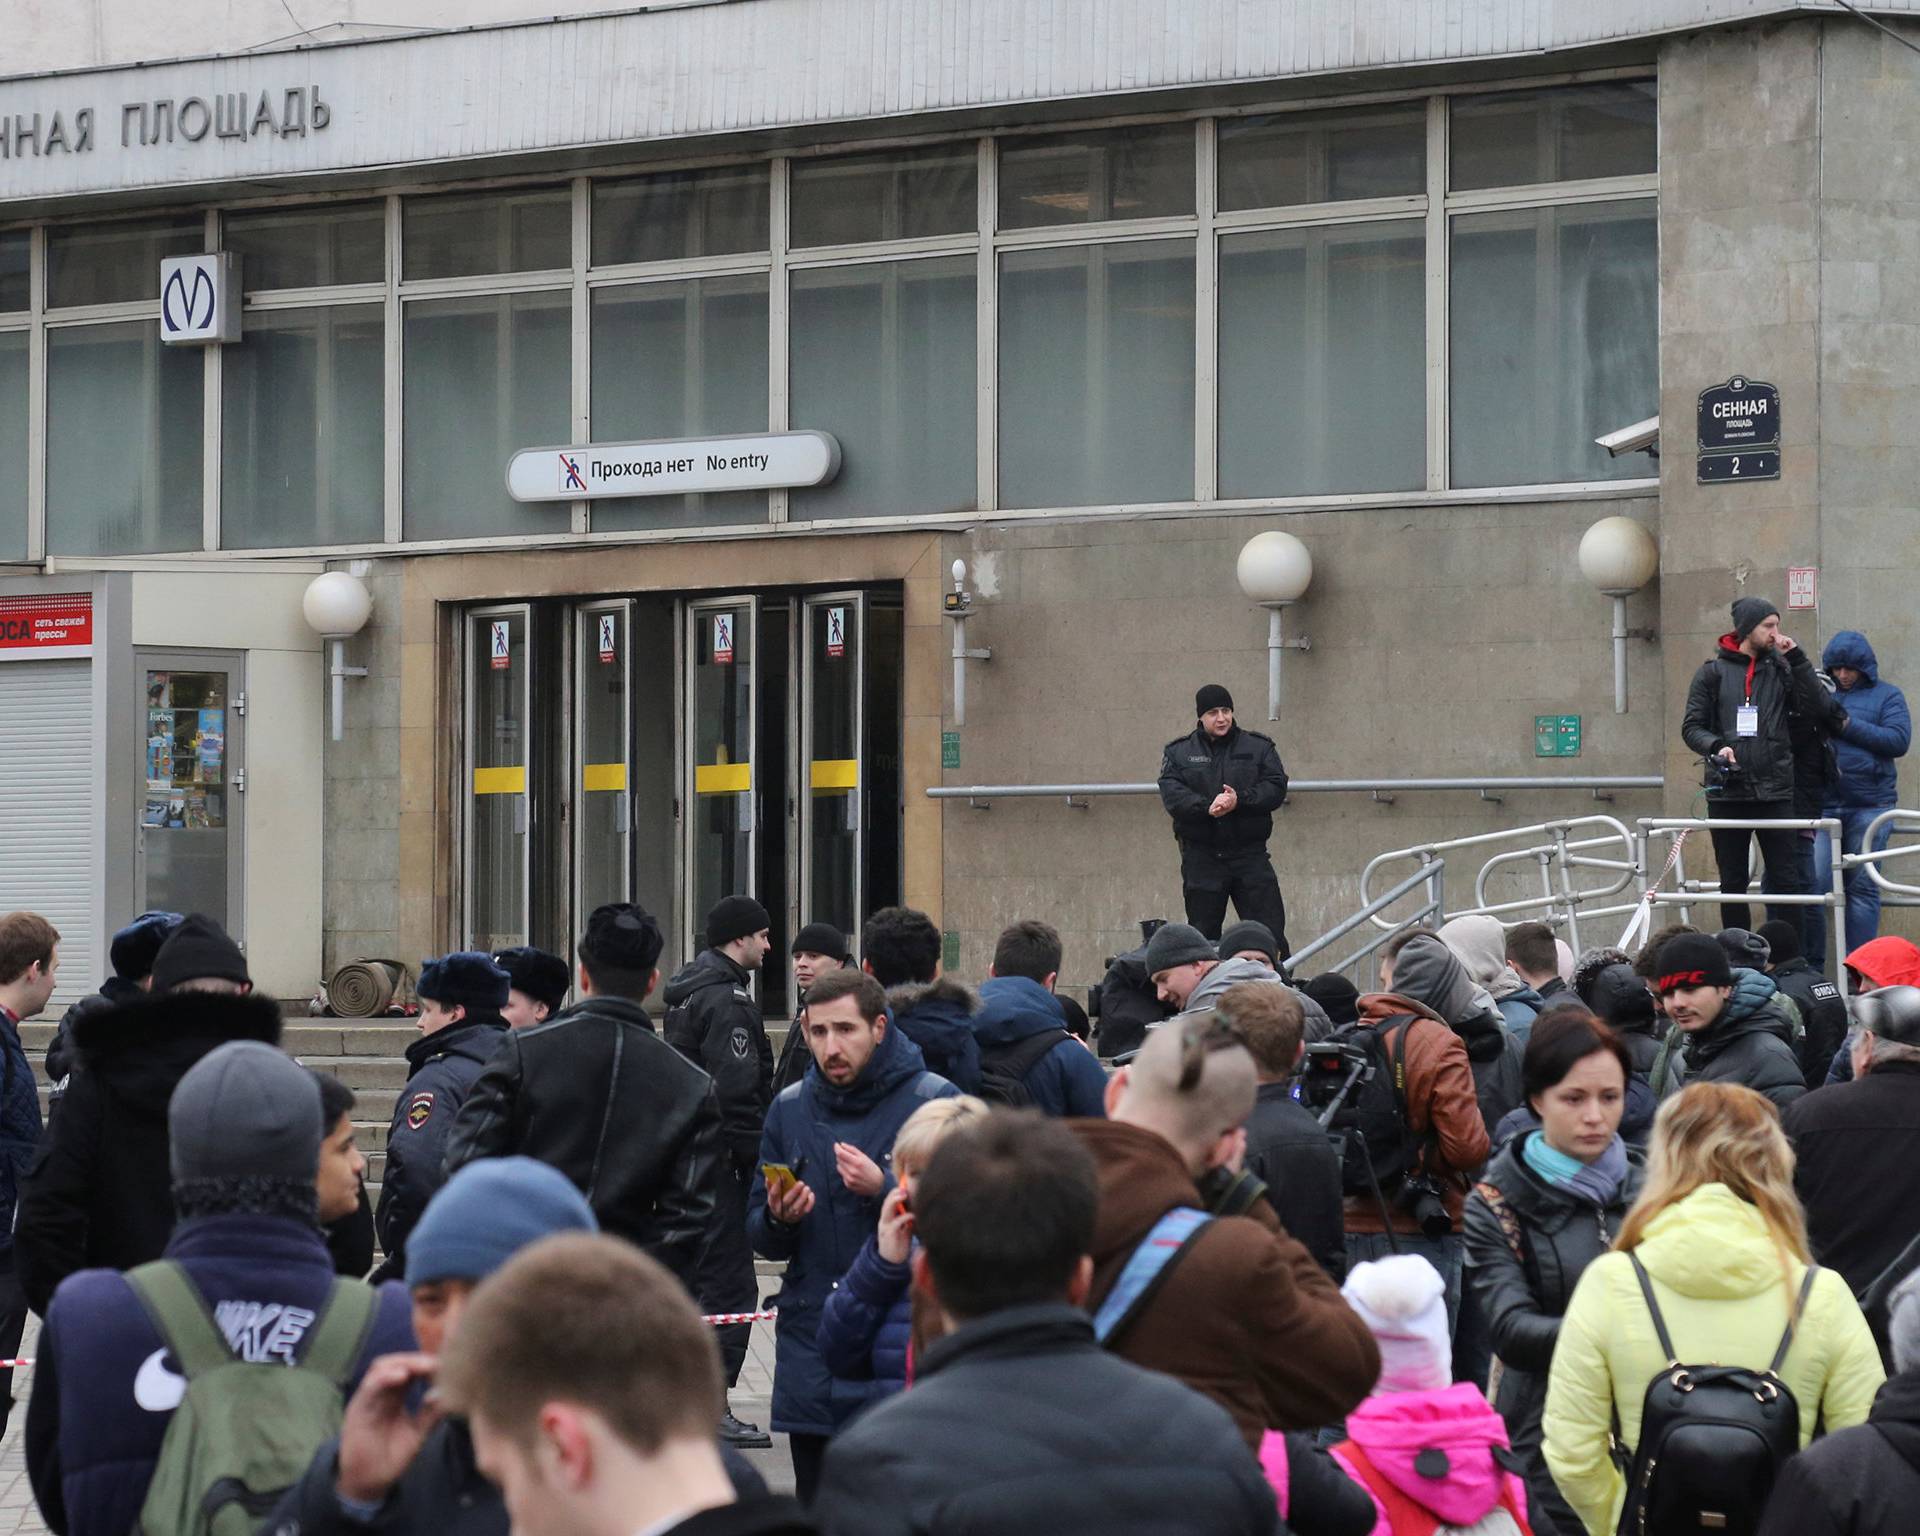 People gather outside Sennaya Ploshchad metro station after explosion tore through train carriage in St. Petersburg metro system, in St. Petersburg